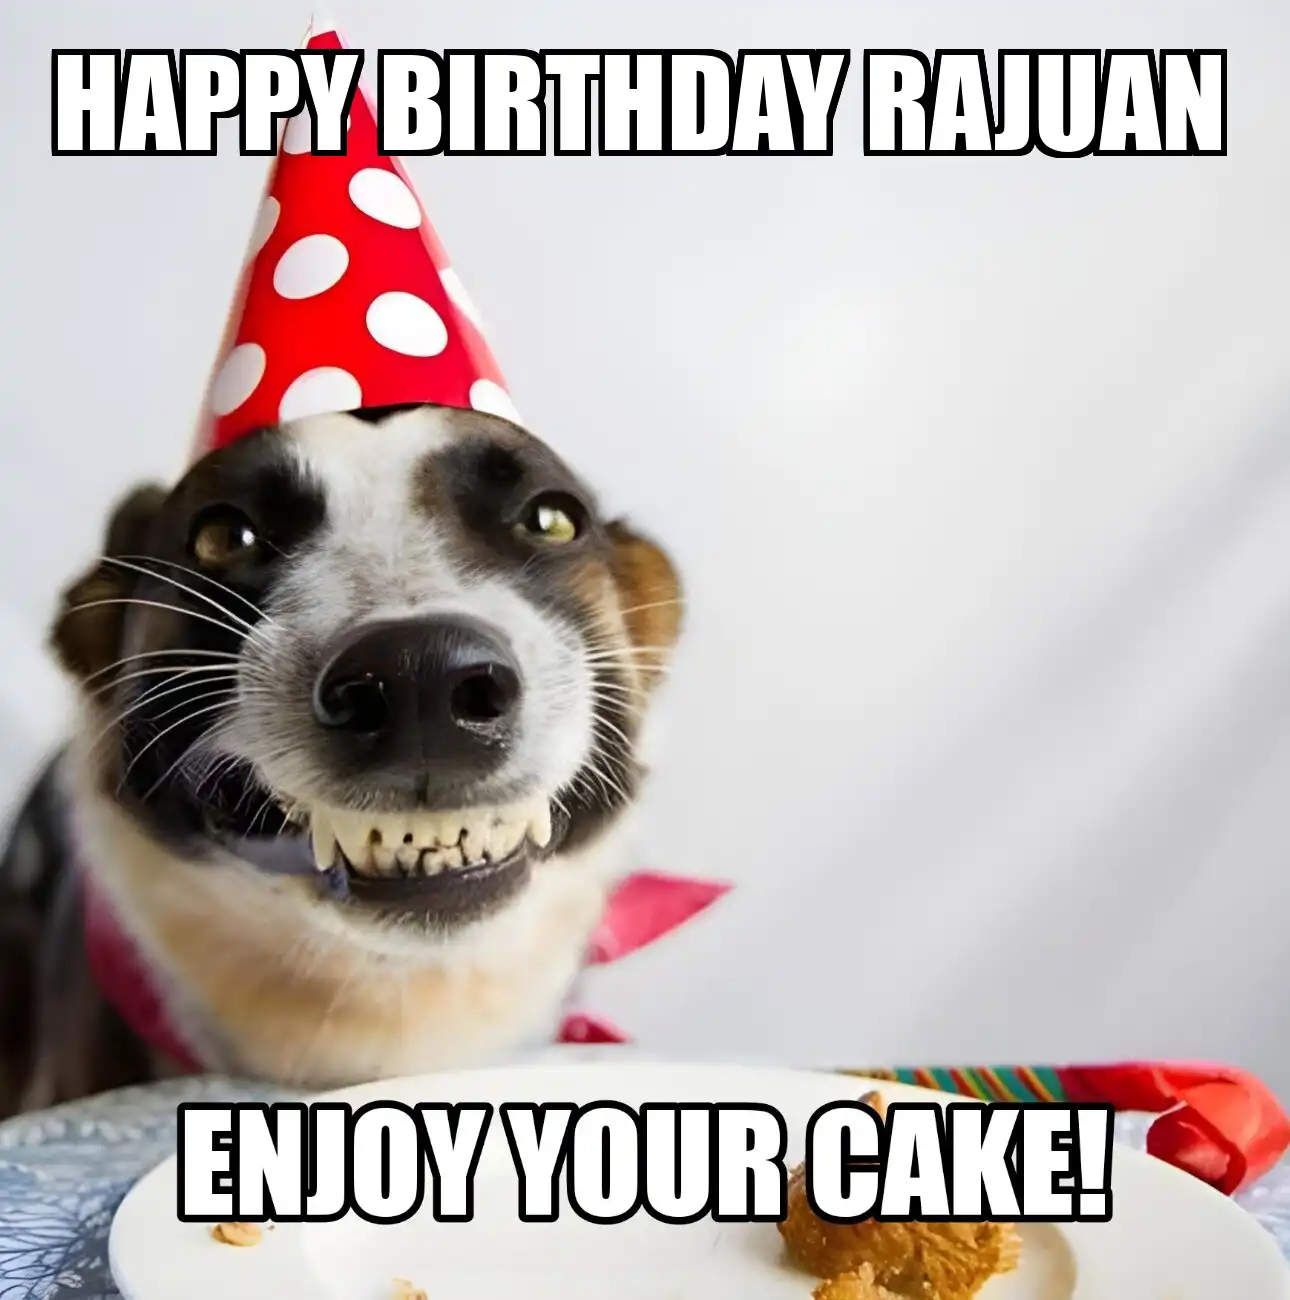 Happy Birthday Rajuan Enjoy Your Cake Dog Meme